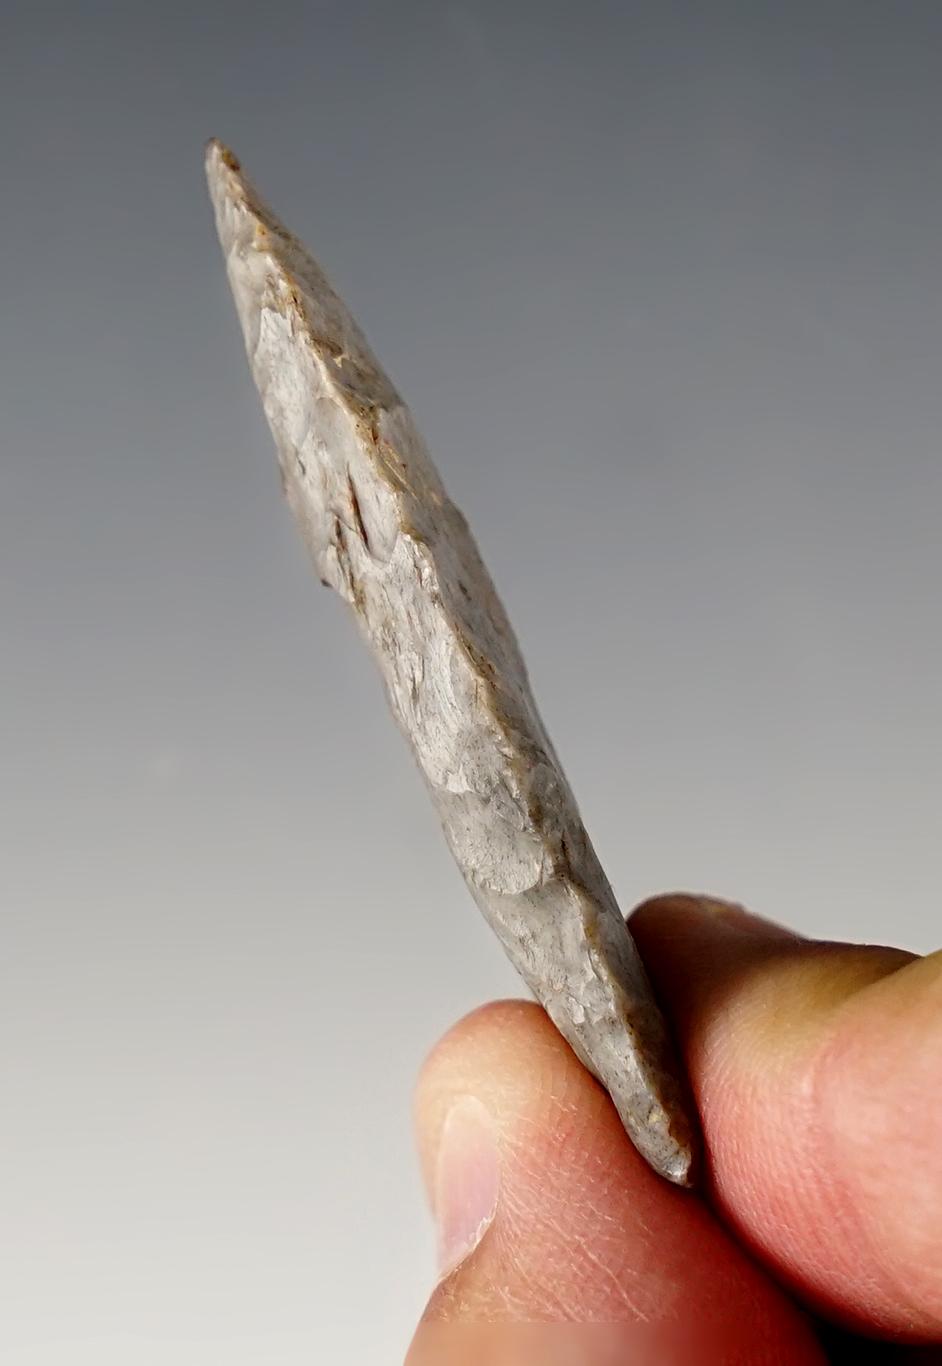 2" Fluted Paleo Clovis found in Mercer Co., Kentucky. Made from high-grade Flint. Dickey COA.